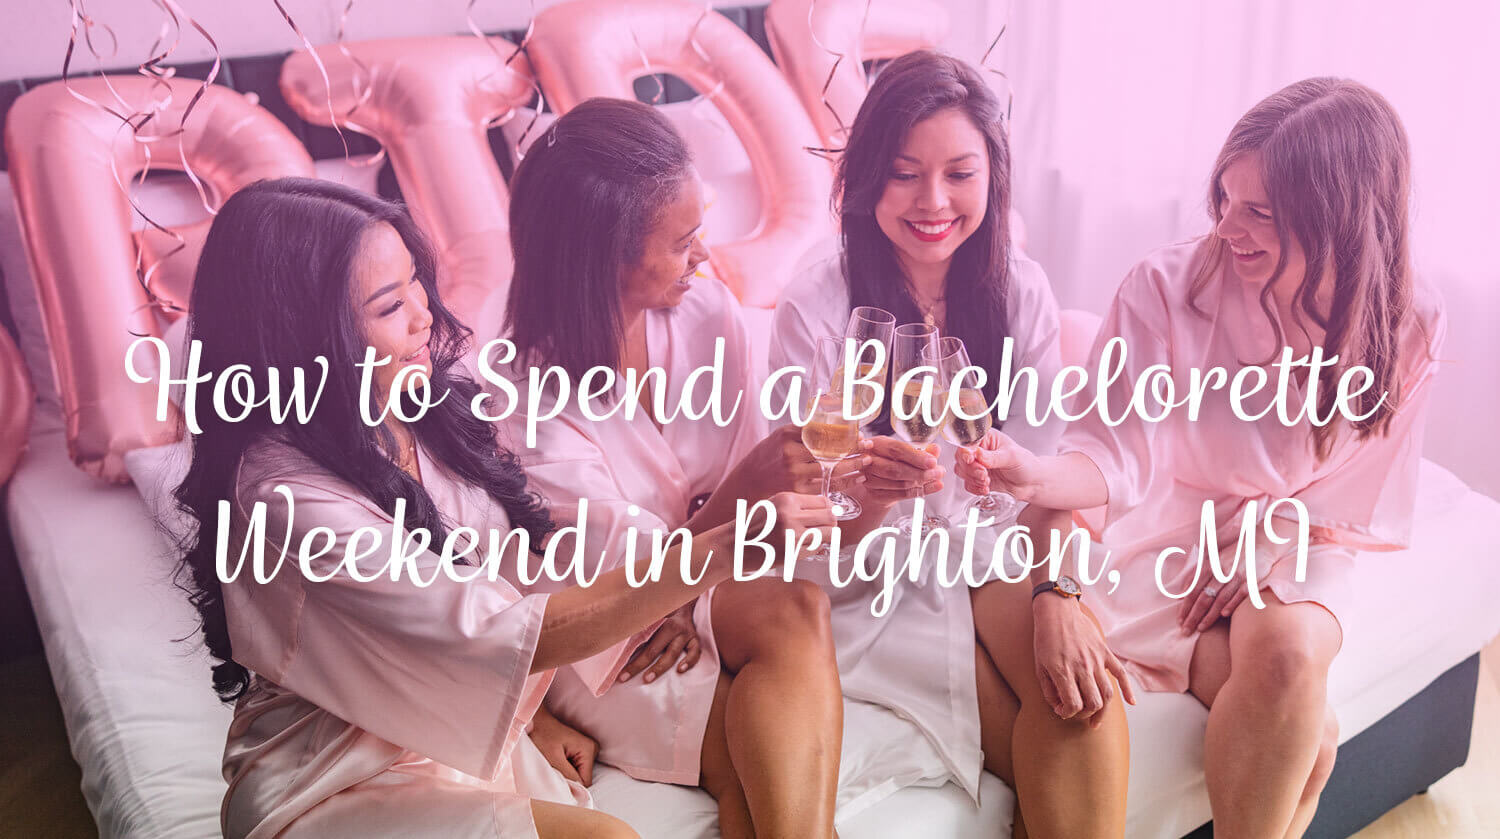 A bride and her bridesmaids celebrate a bachelorette weekend in Brighton, MI.